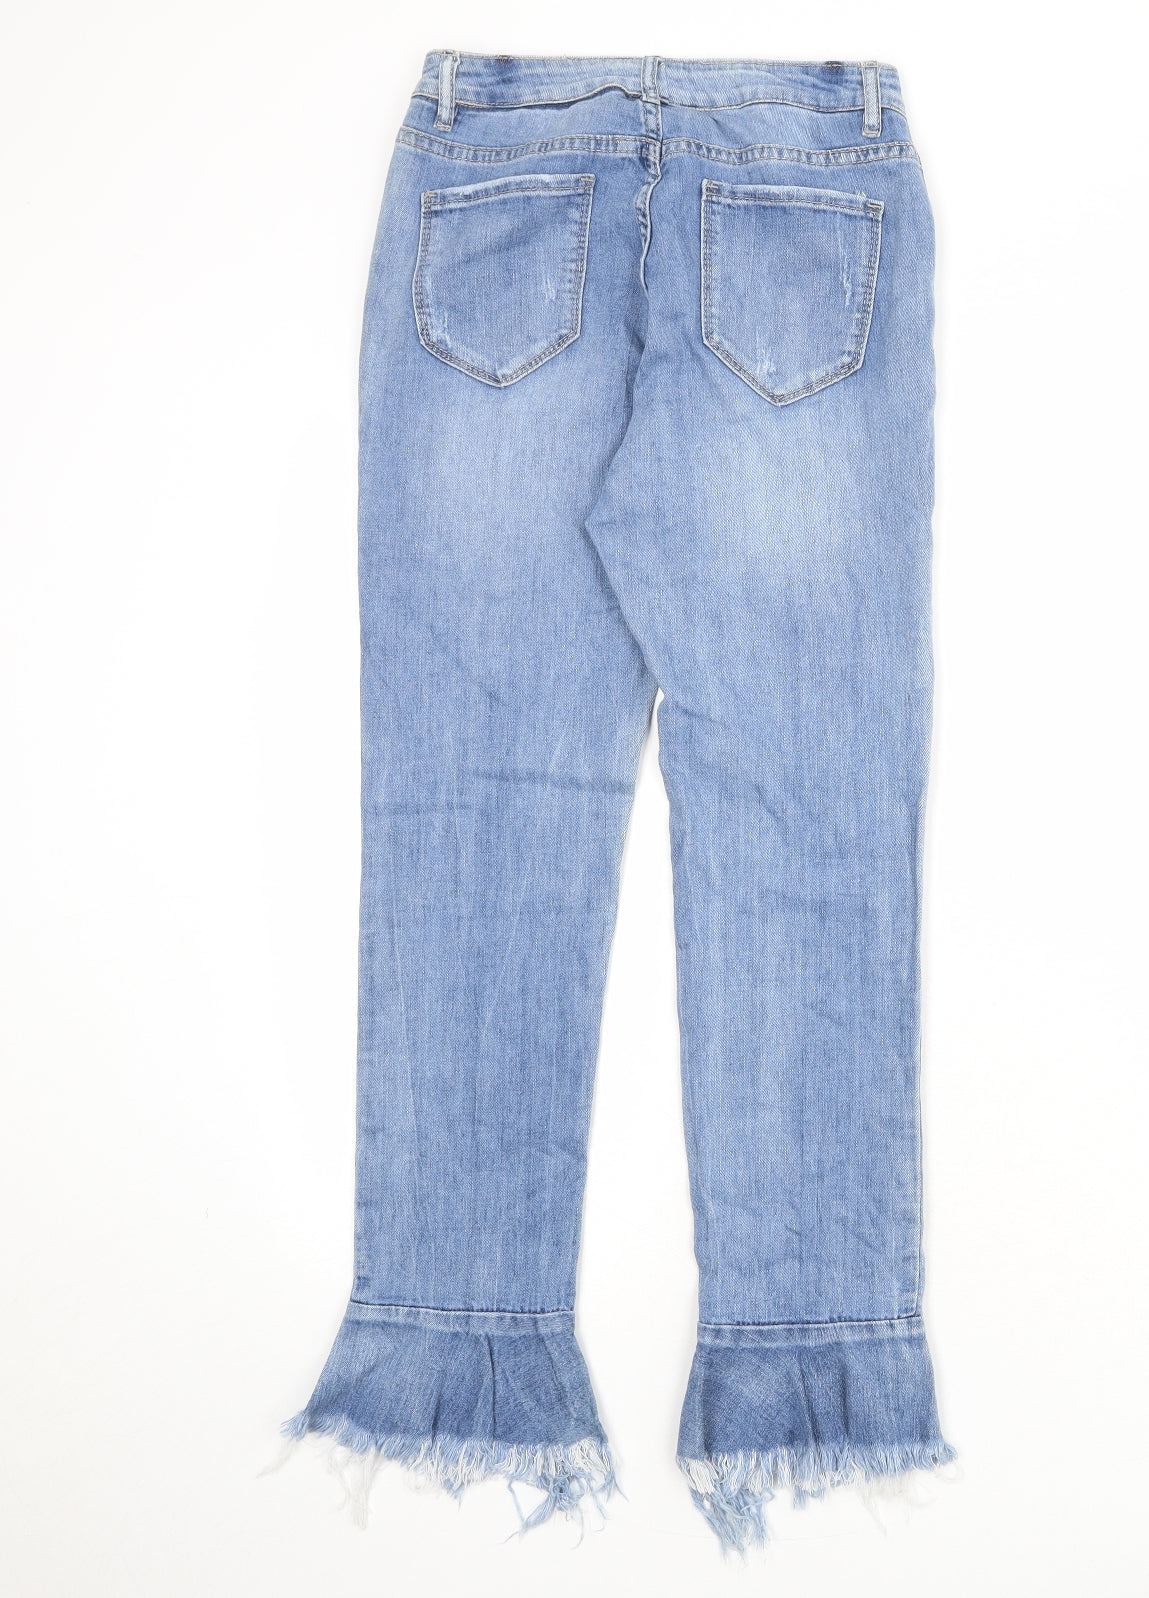 Laulia Womens Blue Cotton Skinny Jeans Size 12 Regular Zip